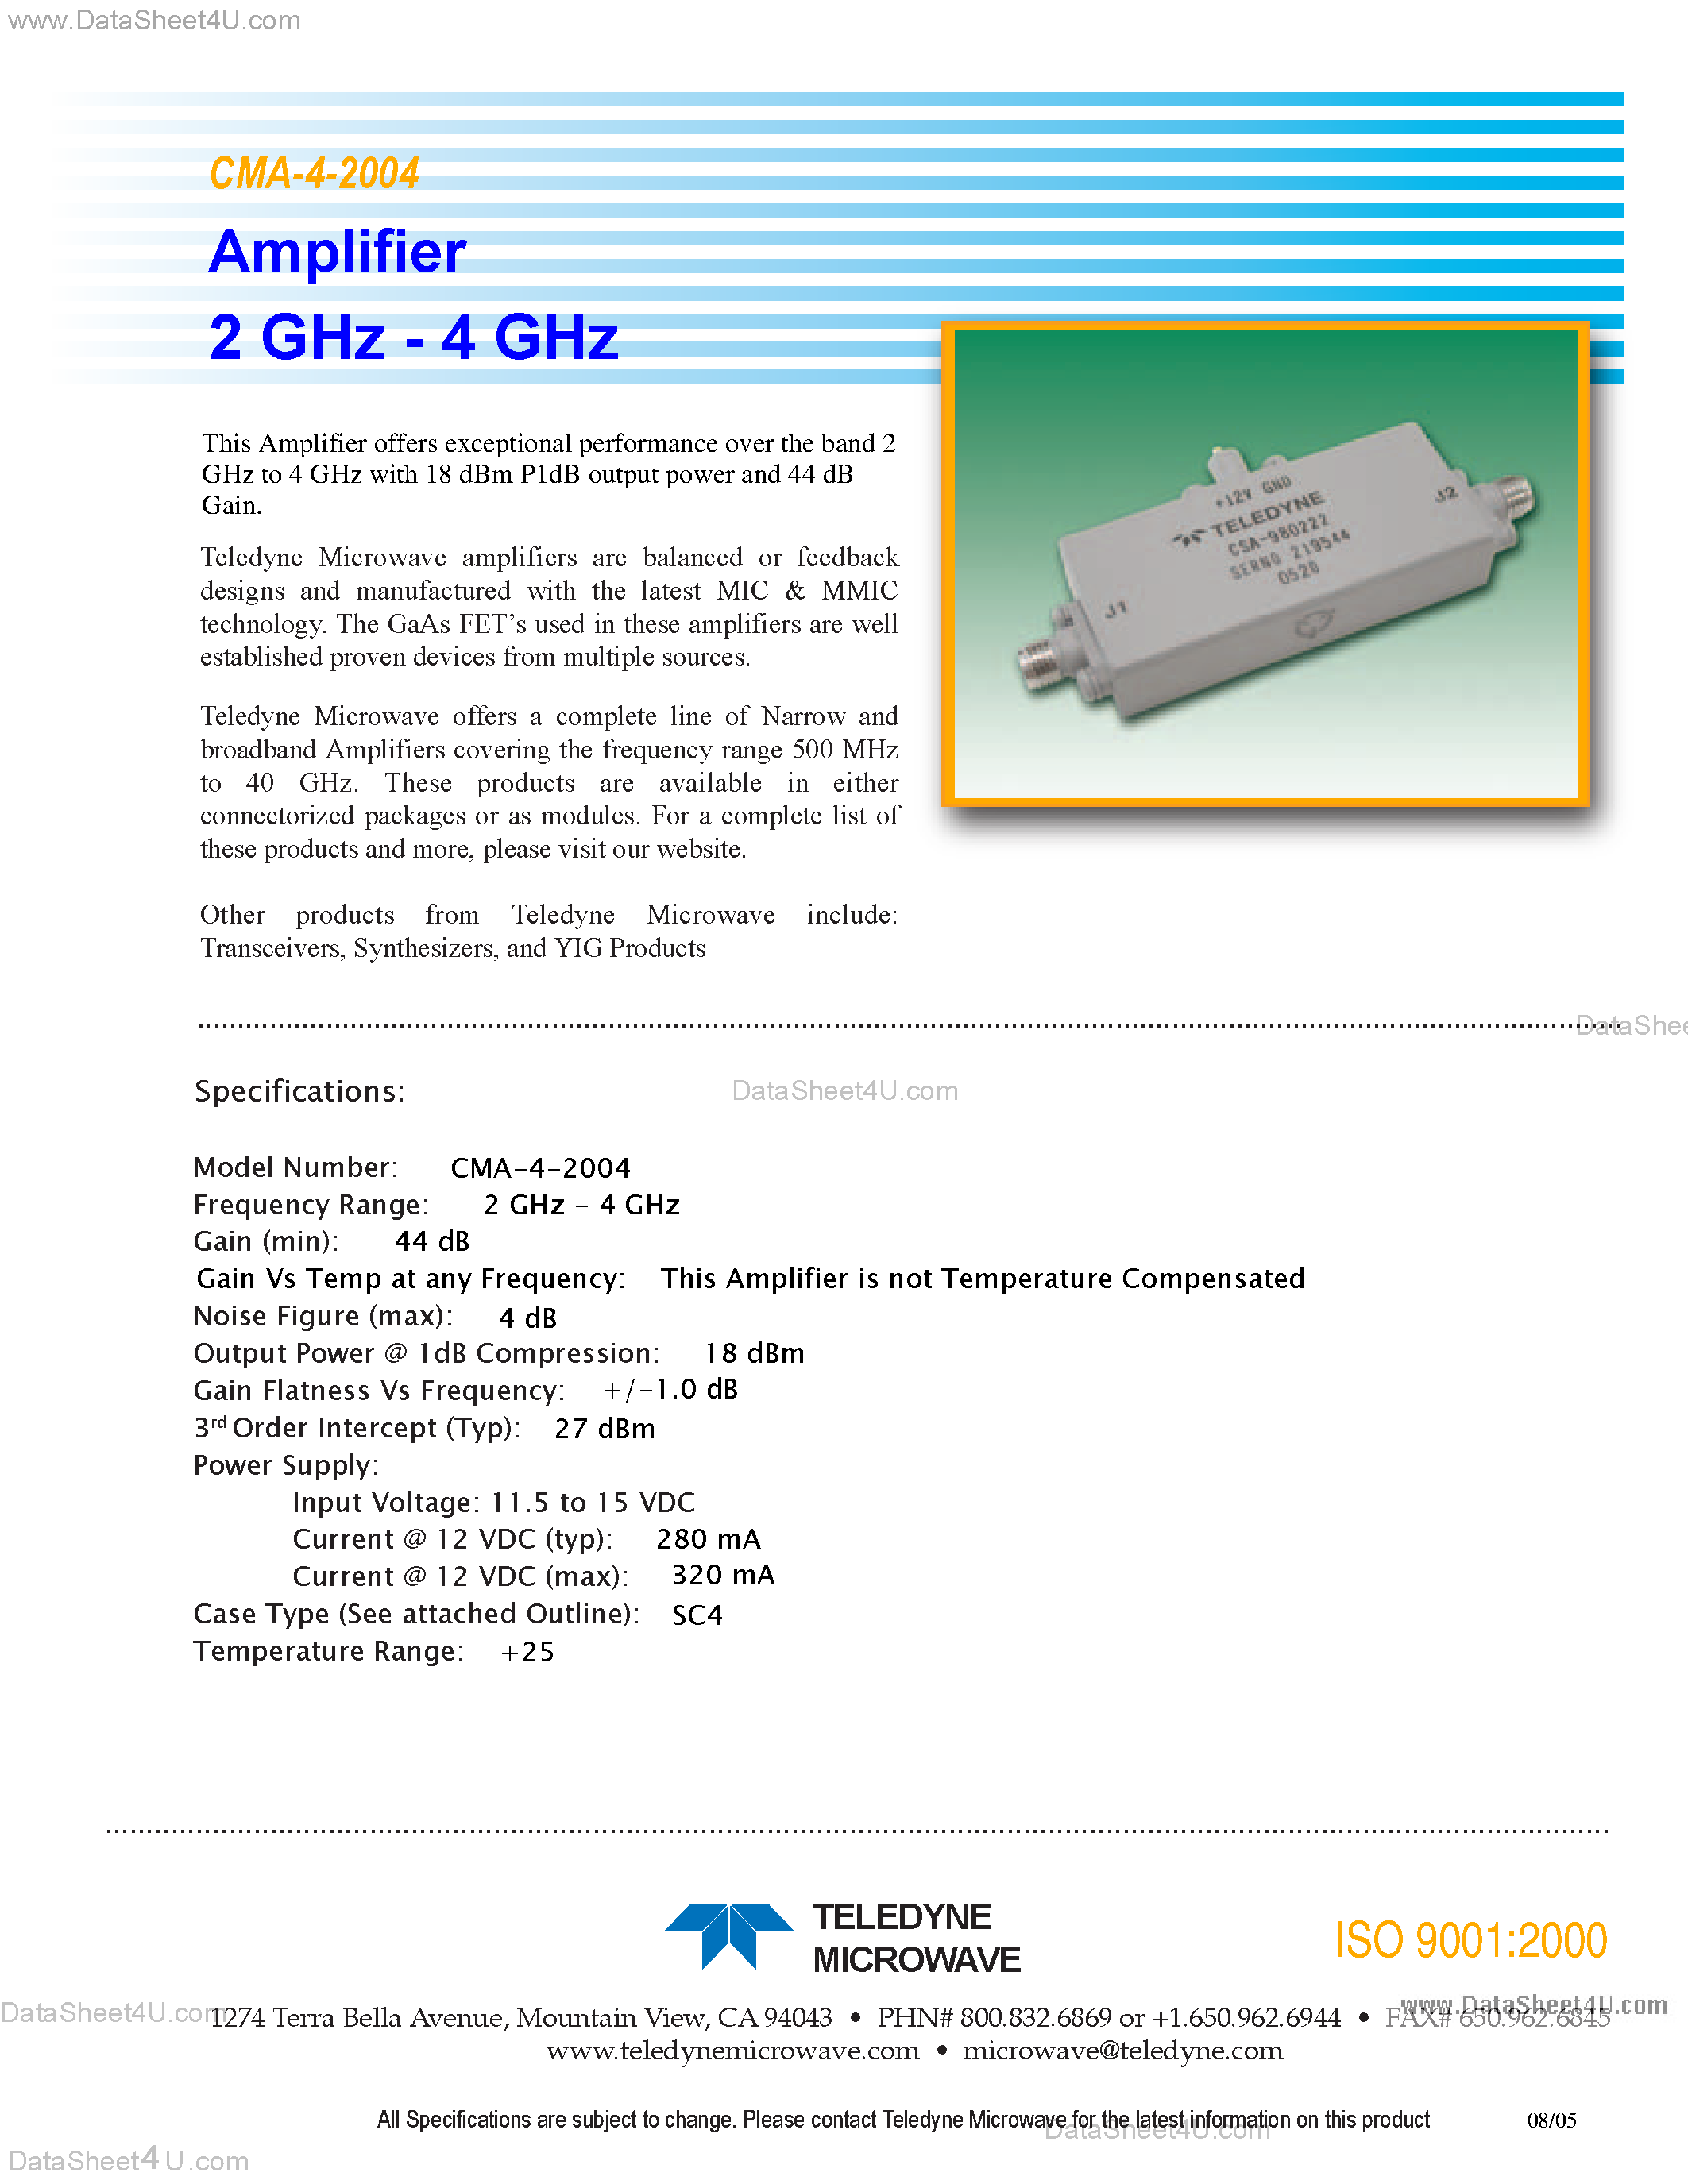 Даташит CMA-4-2004 - Amplifier 2 GHz - 4 GHz страница 1